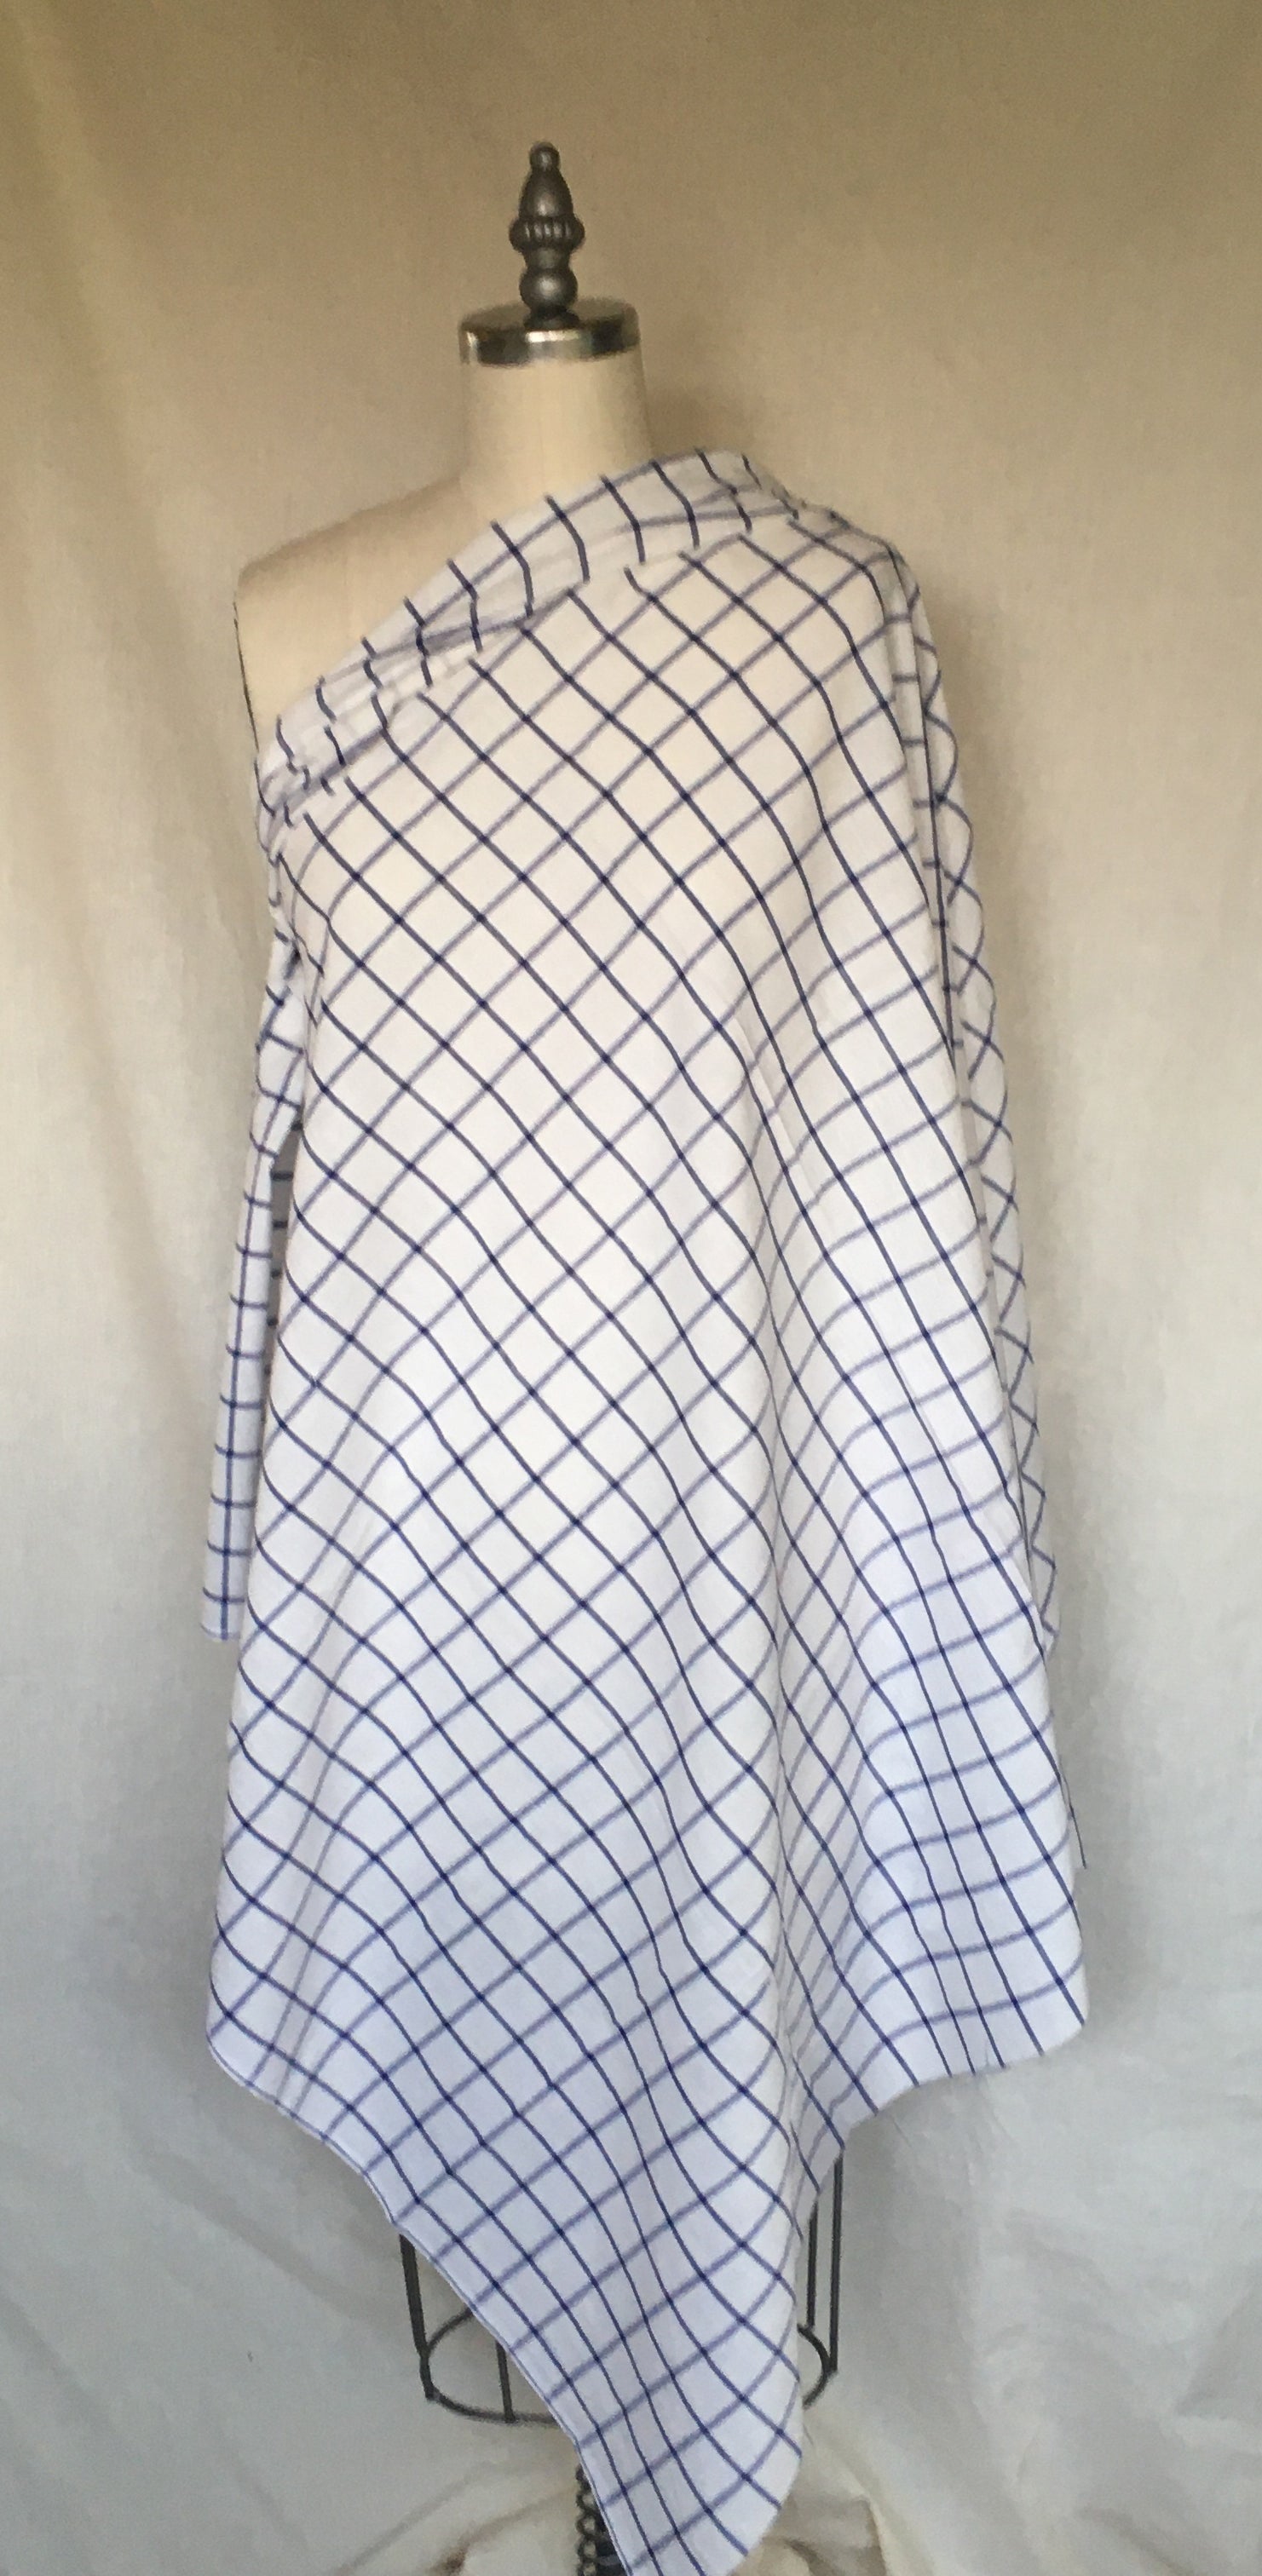 Photo of window pane fabric bias draped on a dress form